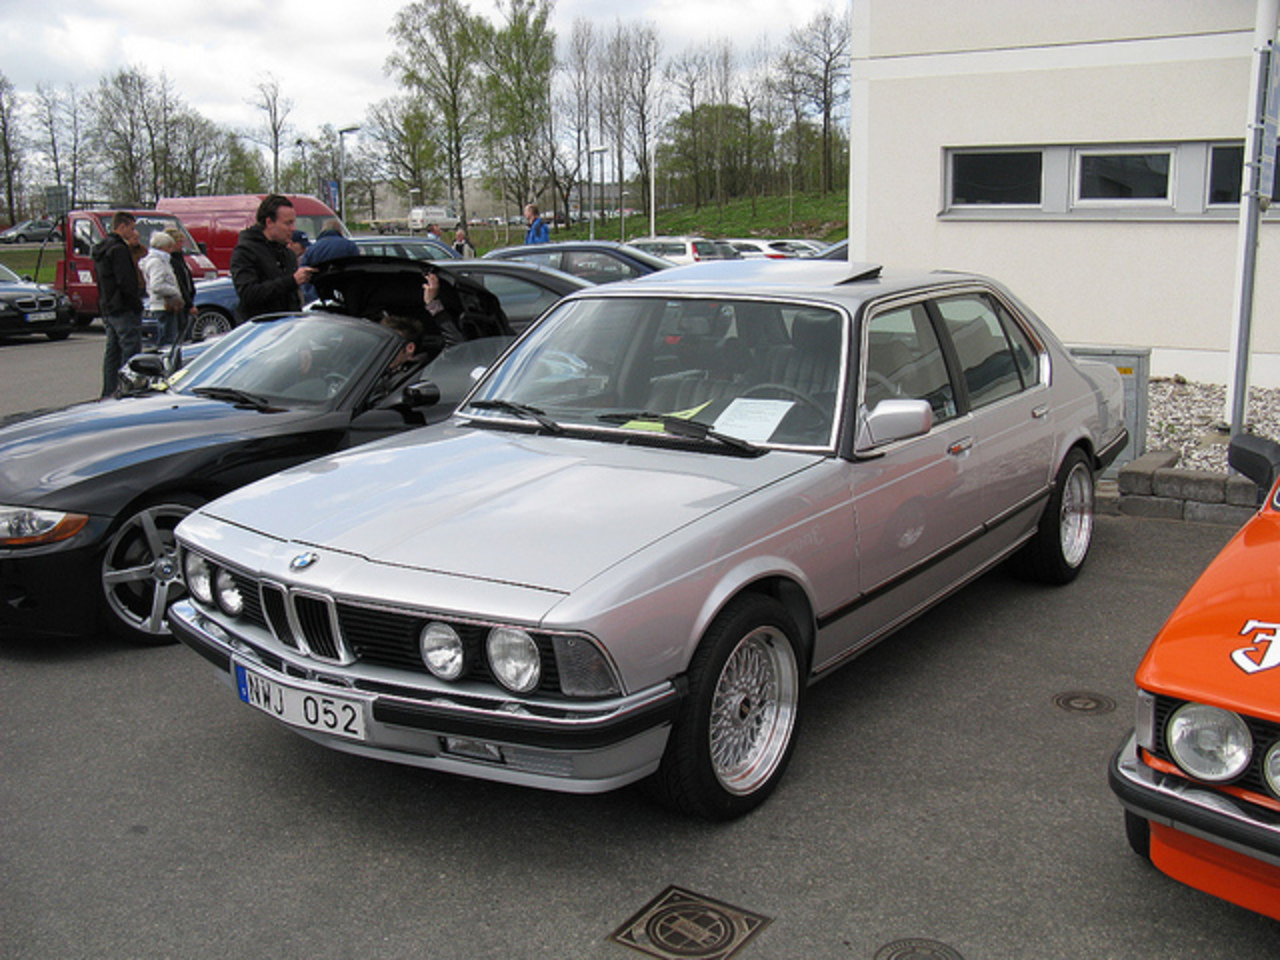 BMW 745i E23 | Flickr - Photo Sharing!